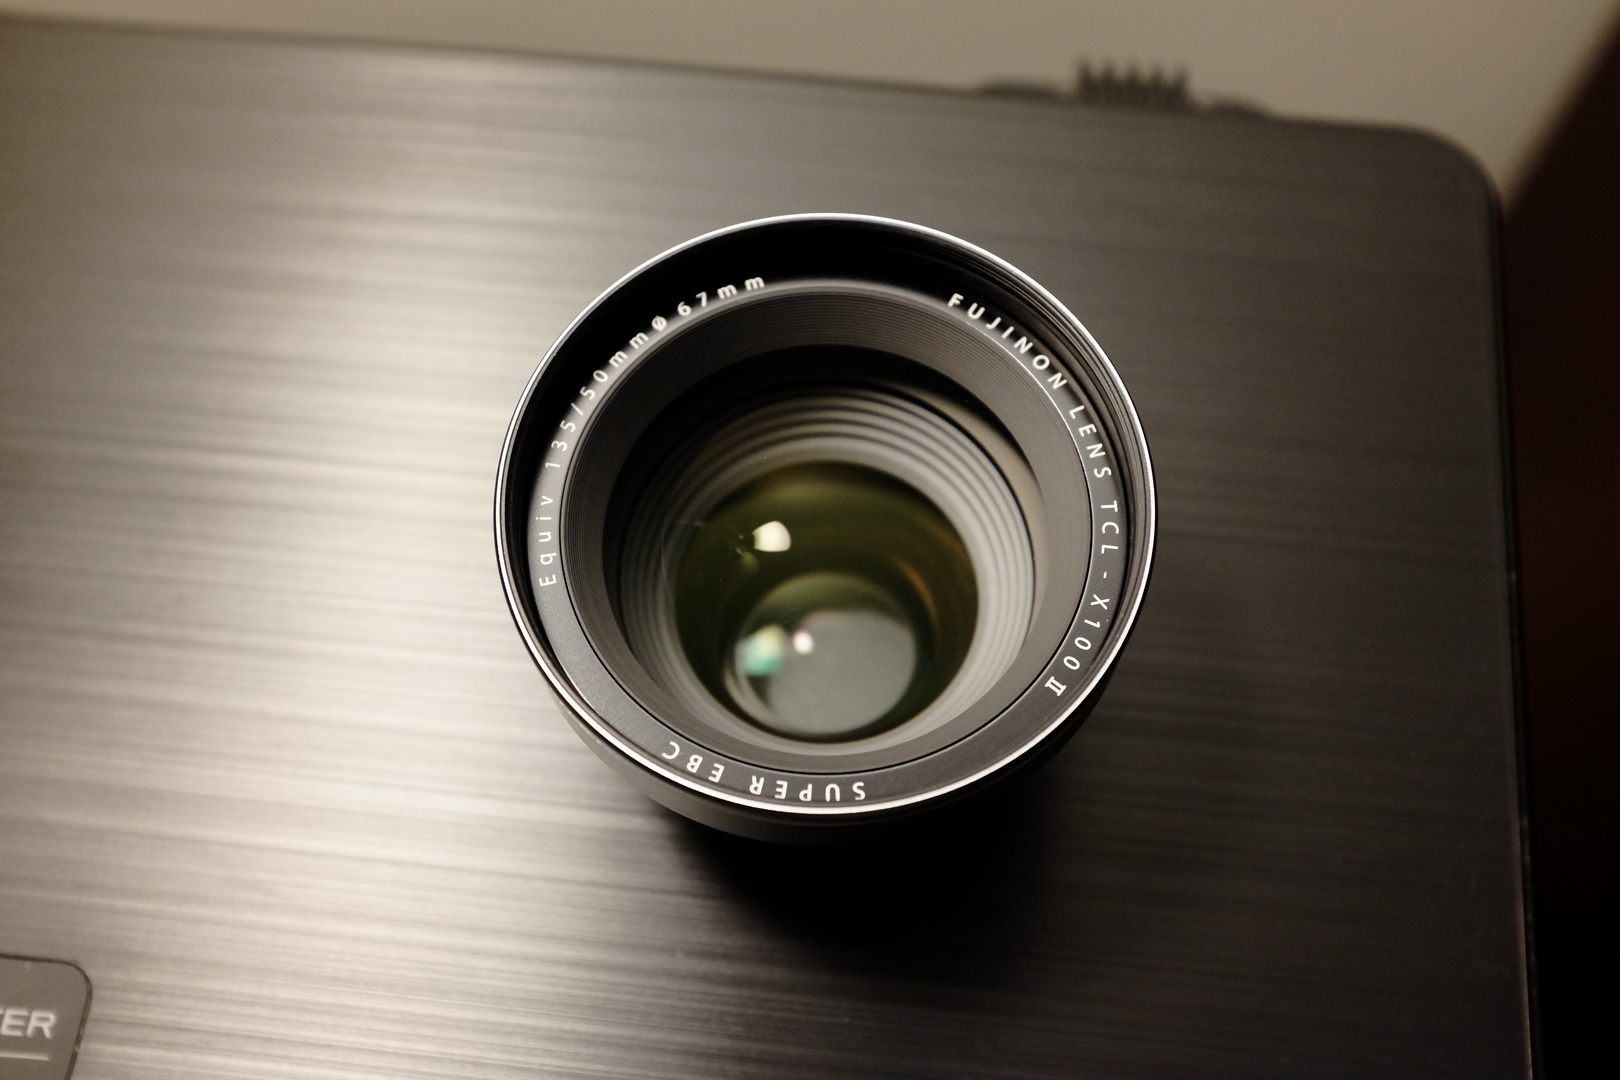 Fuji TCL-X100 II lens overhead, showing the lens markings.